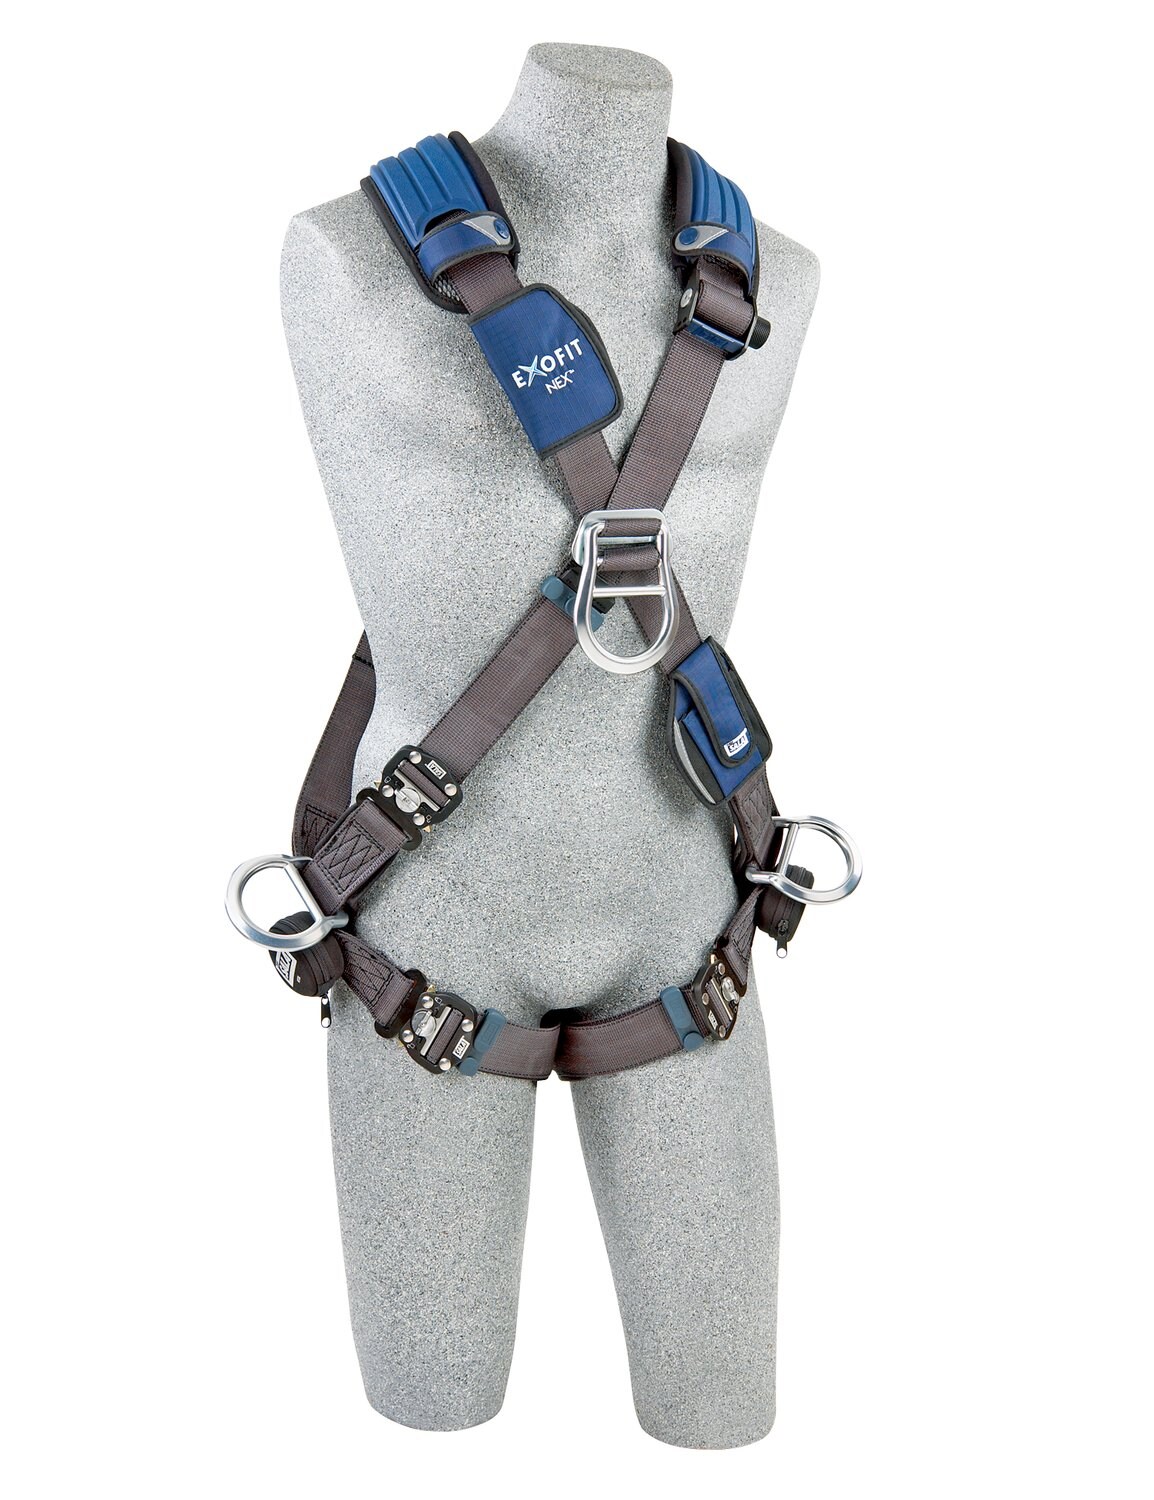 7012816202 - 3M DBI-SALA ExoFit NEX Comfort Cross-Over Climbing/Positioning Safety Harness 1113118, 2X